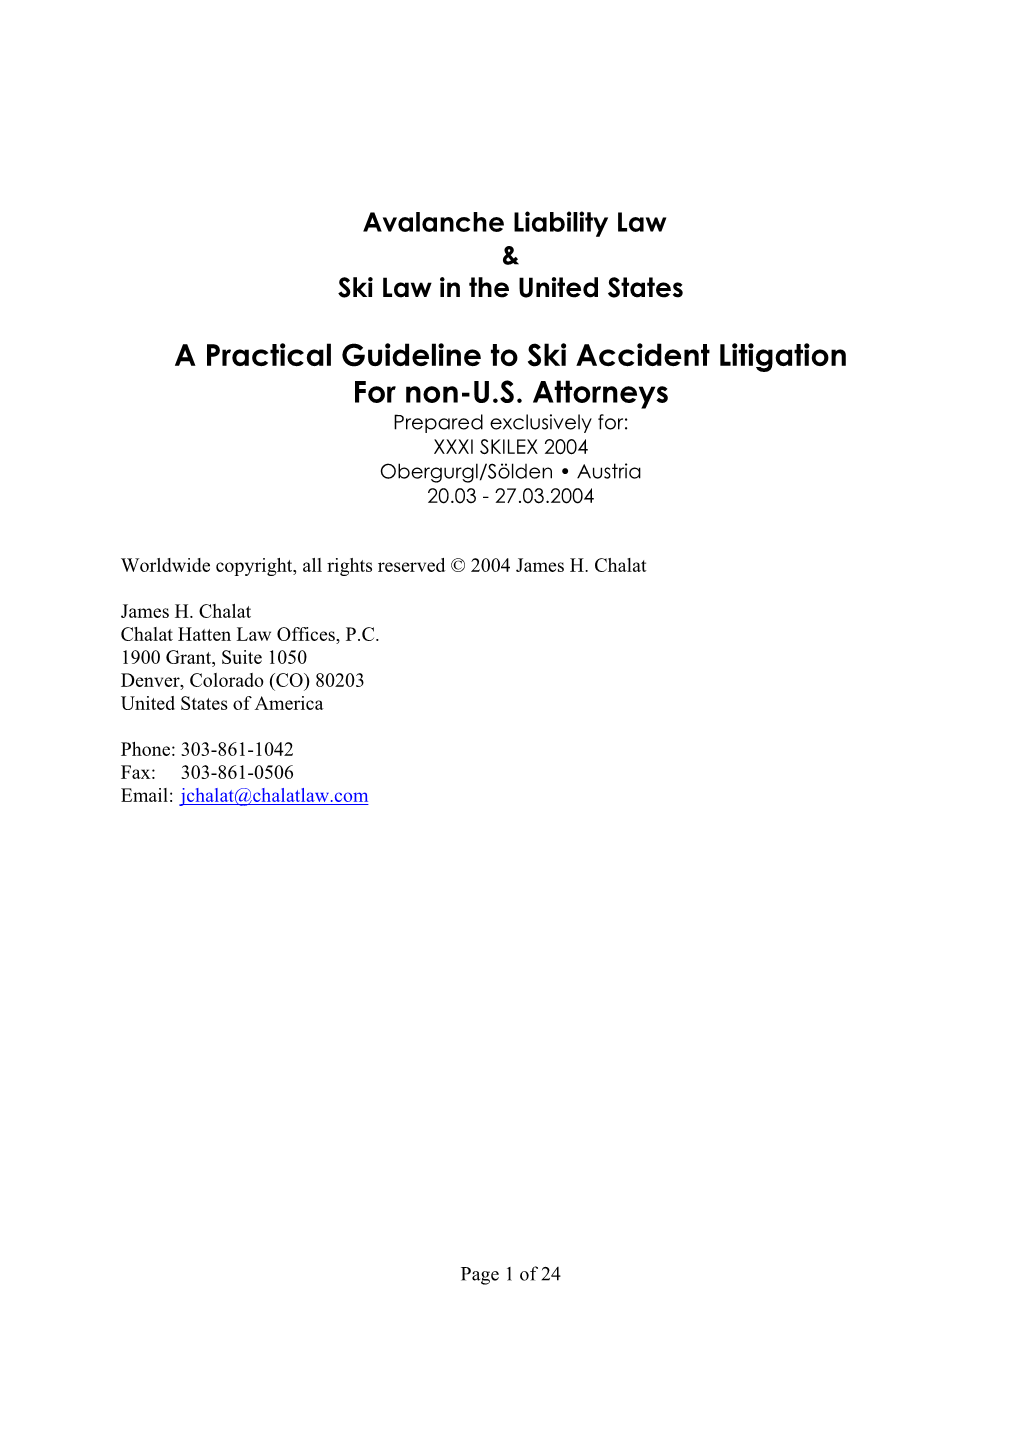 A Practical Guideline to Ski Accident Litigation for Non-U.S. Attorneys Prepared Exclusively For: XXXI SKILEX 2004 Obergurgl/Sölden • Austria 20.03 - 27.03.2004